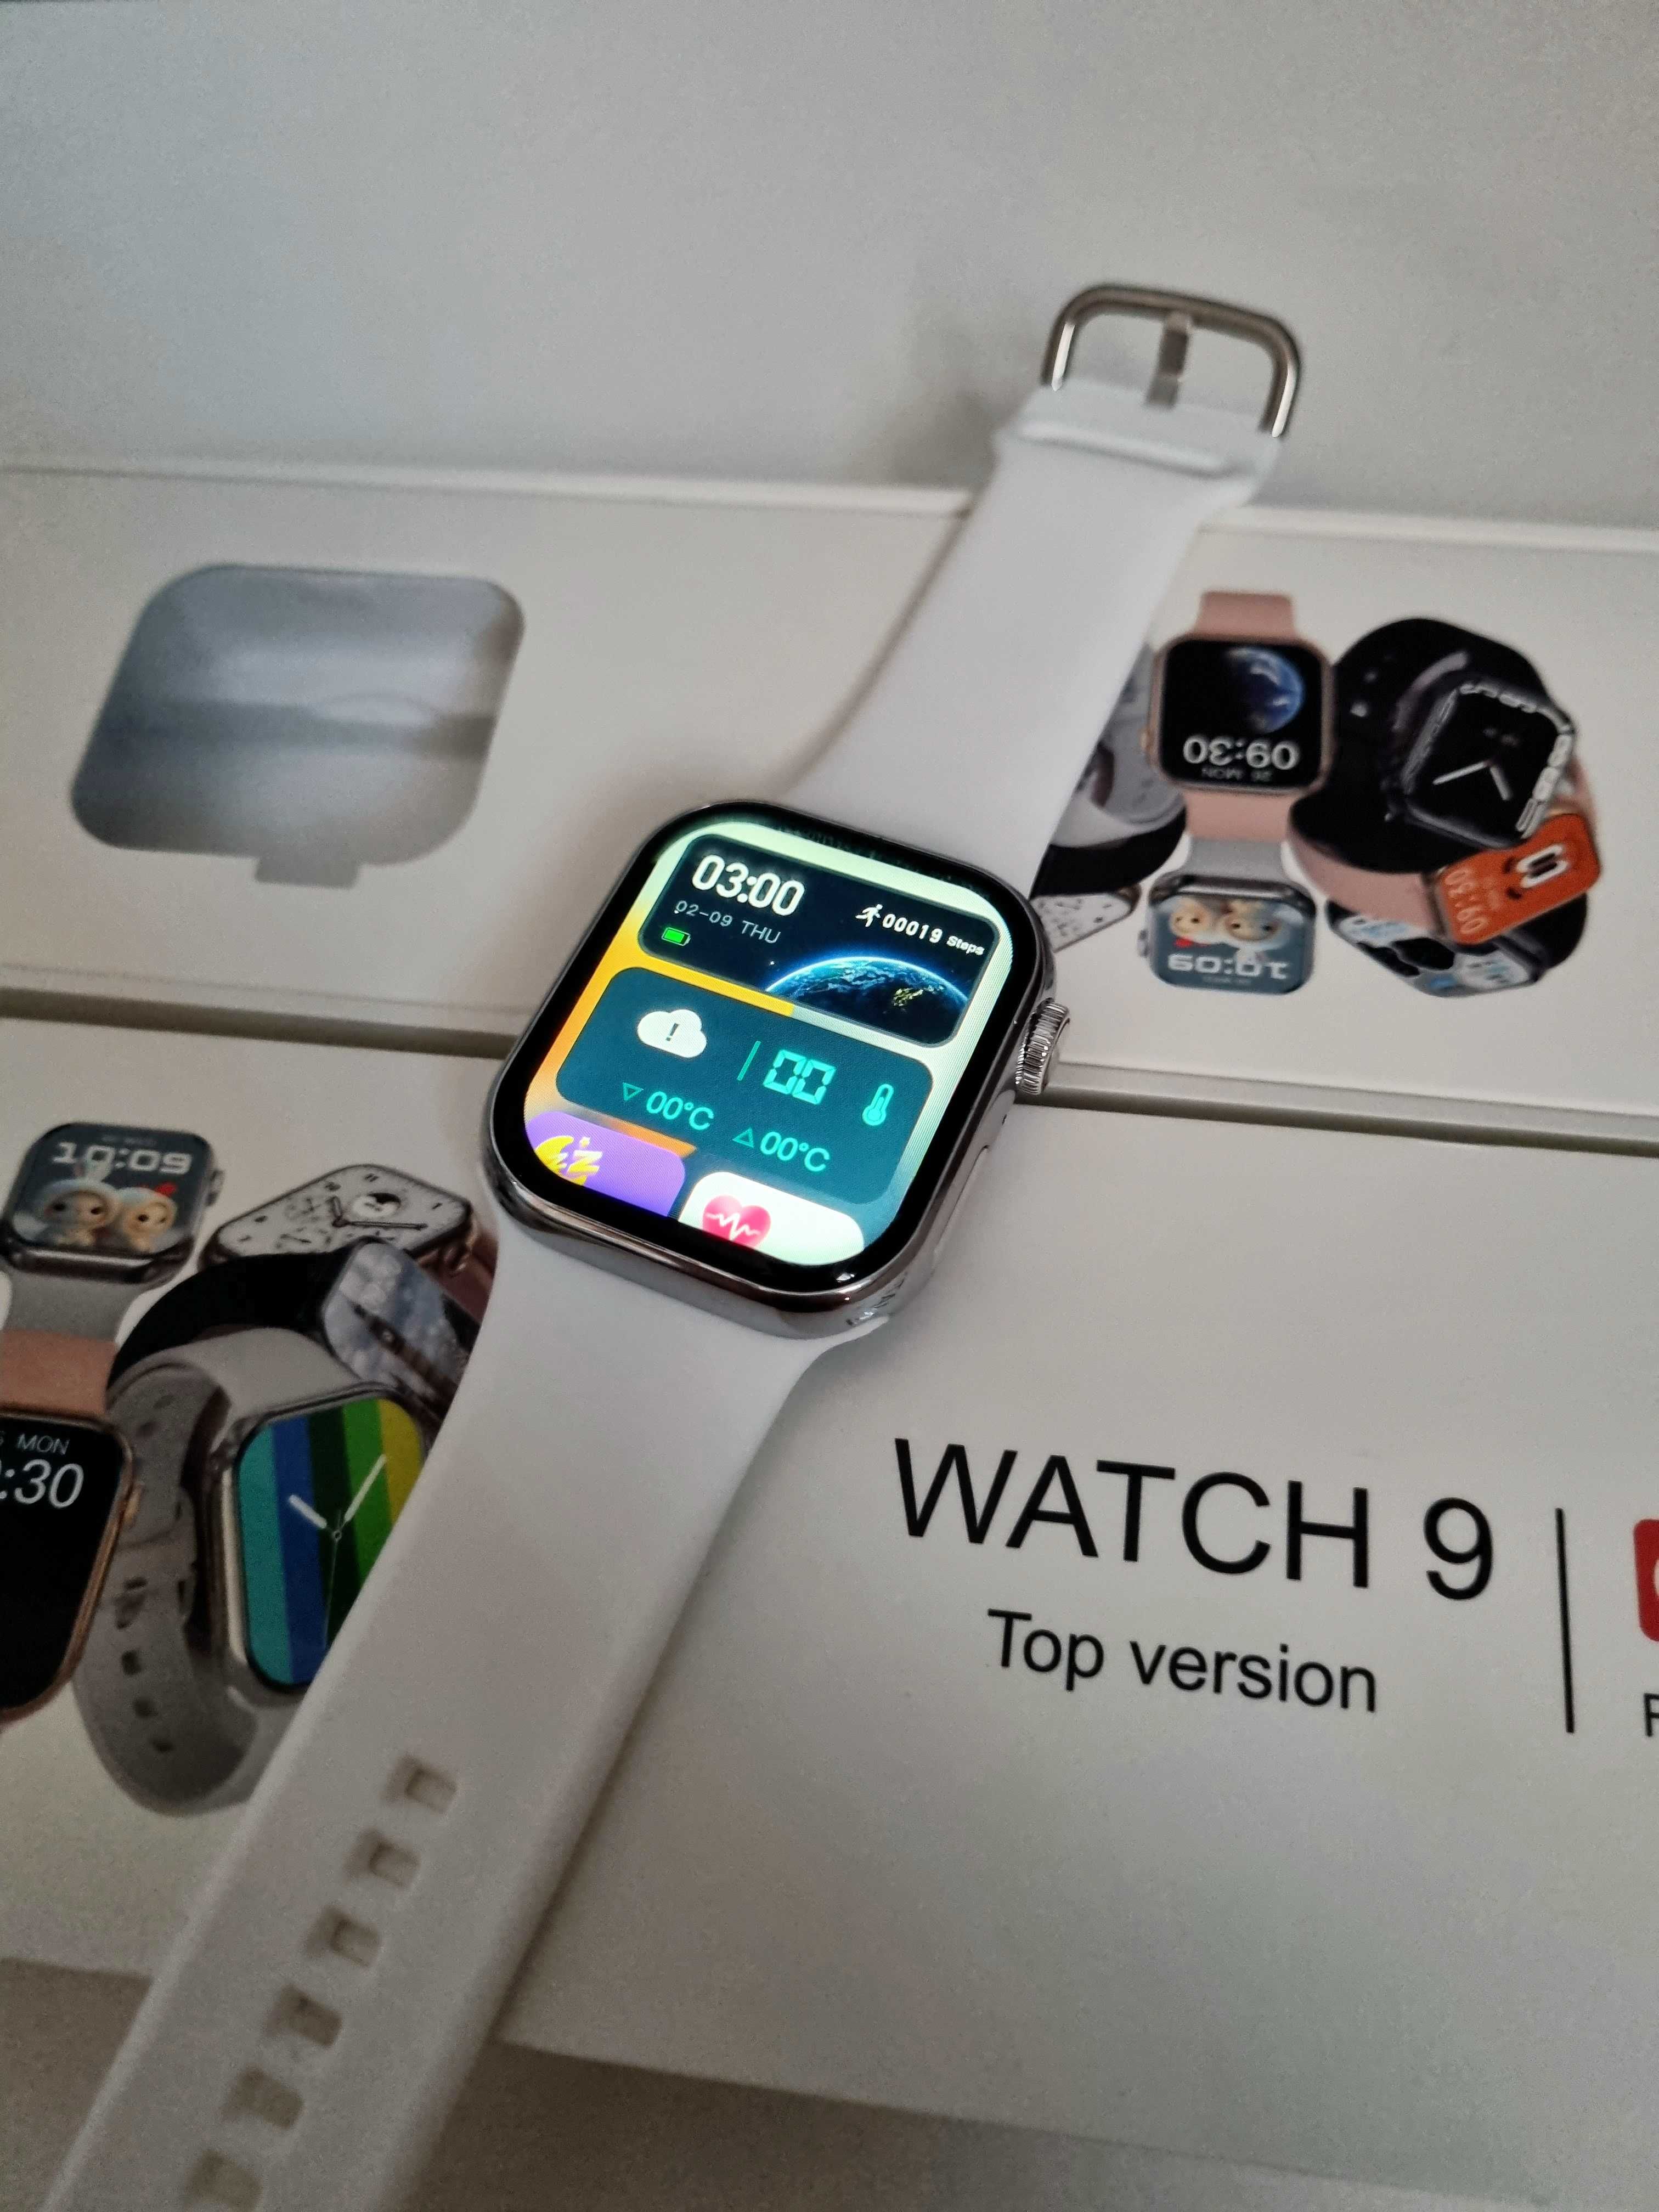 Smartwatch 9 Top Version